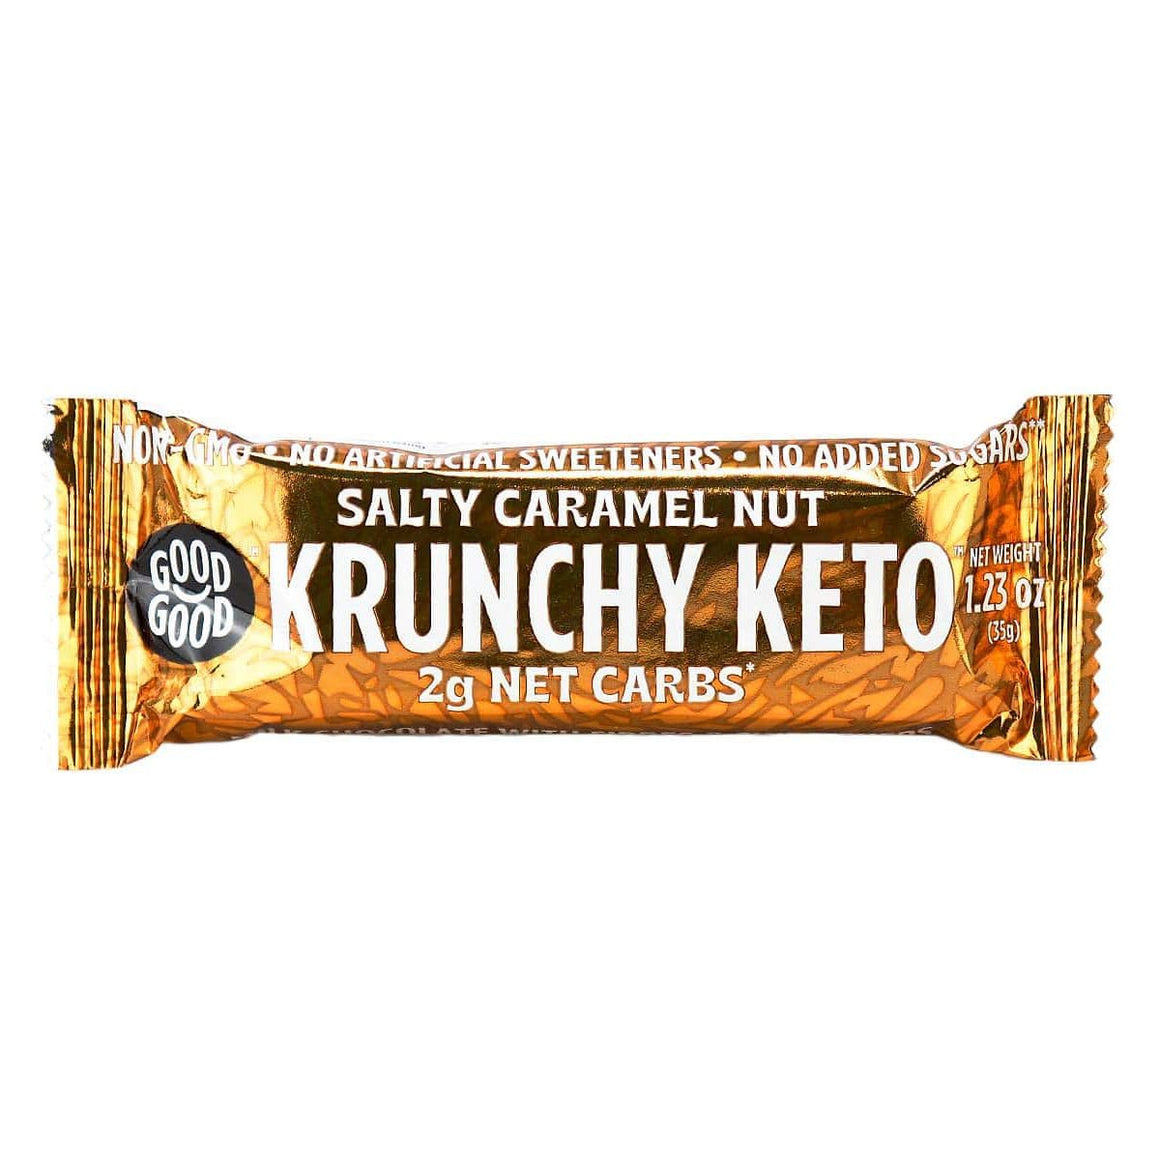 Good Good - Krunchy Keto - Noix de caramel salé - 35g 